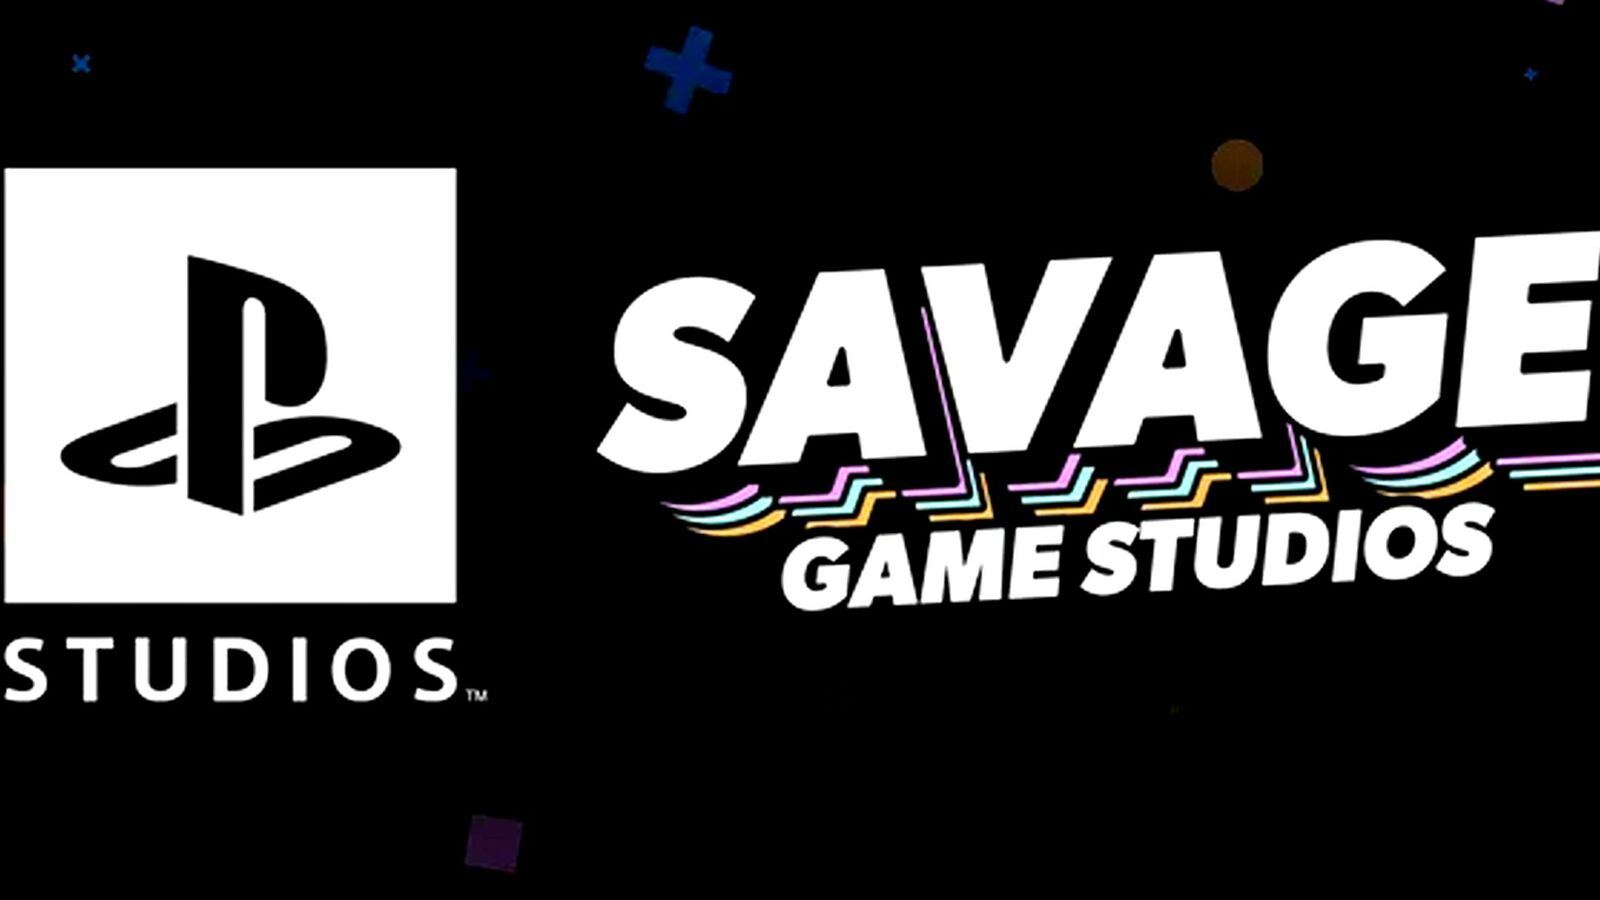 Sony acquista lo studio Mobile Savage Game Studios